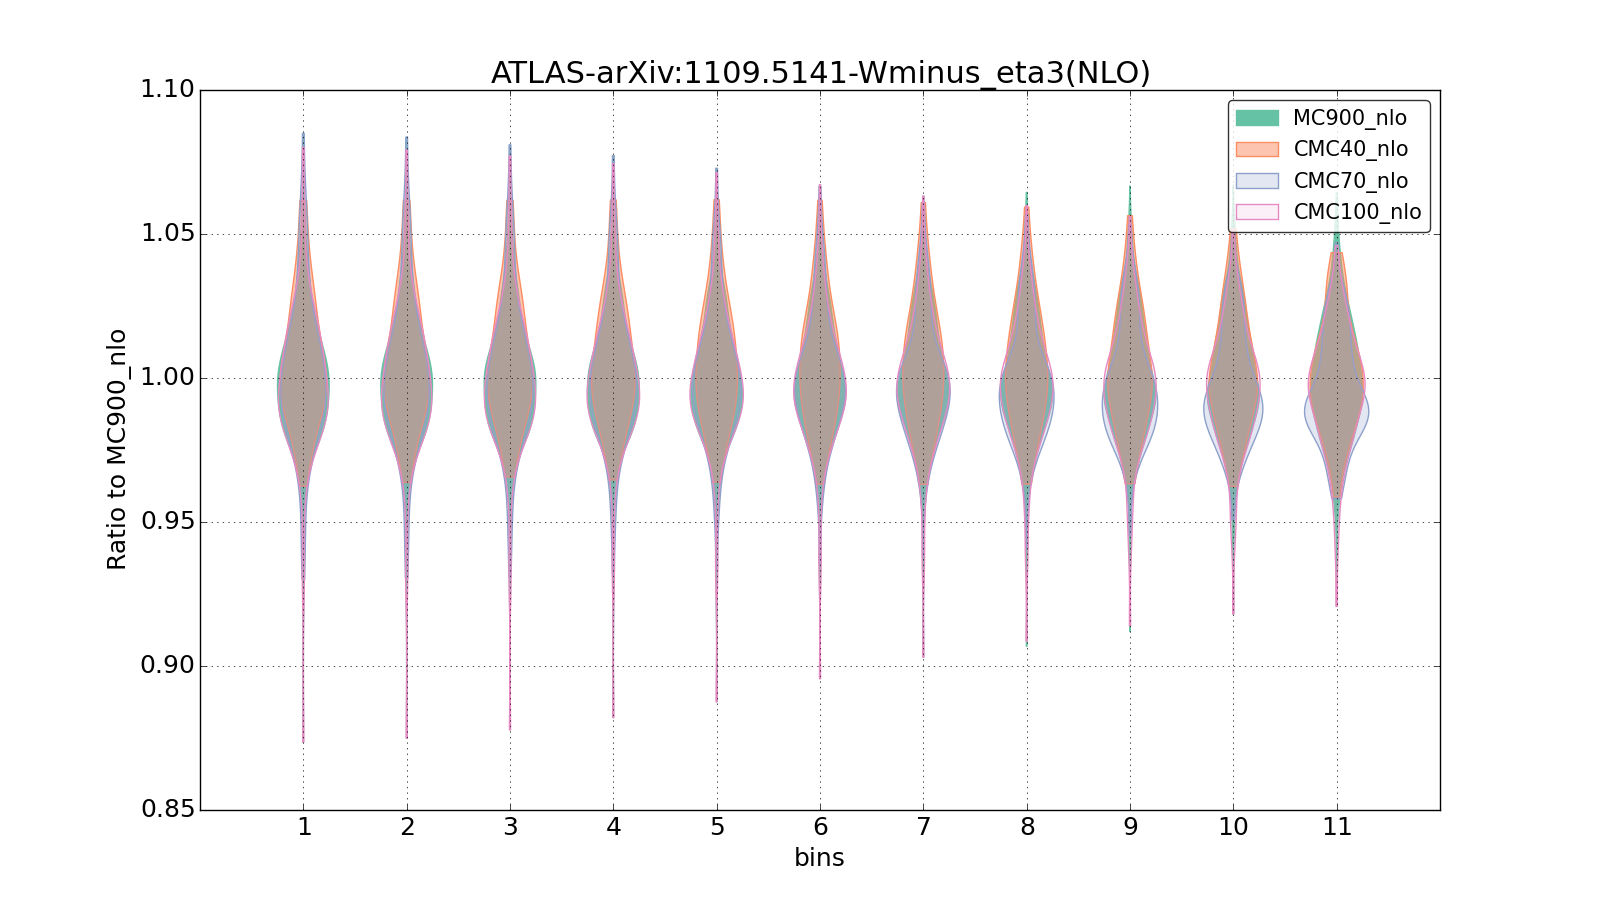 figure plots/CMCpheno/group_1_violinplot_ATLAS-arXiv:11095141-Wminus_eta3(NLO).png